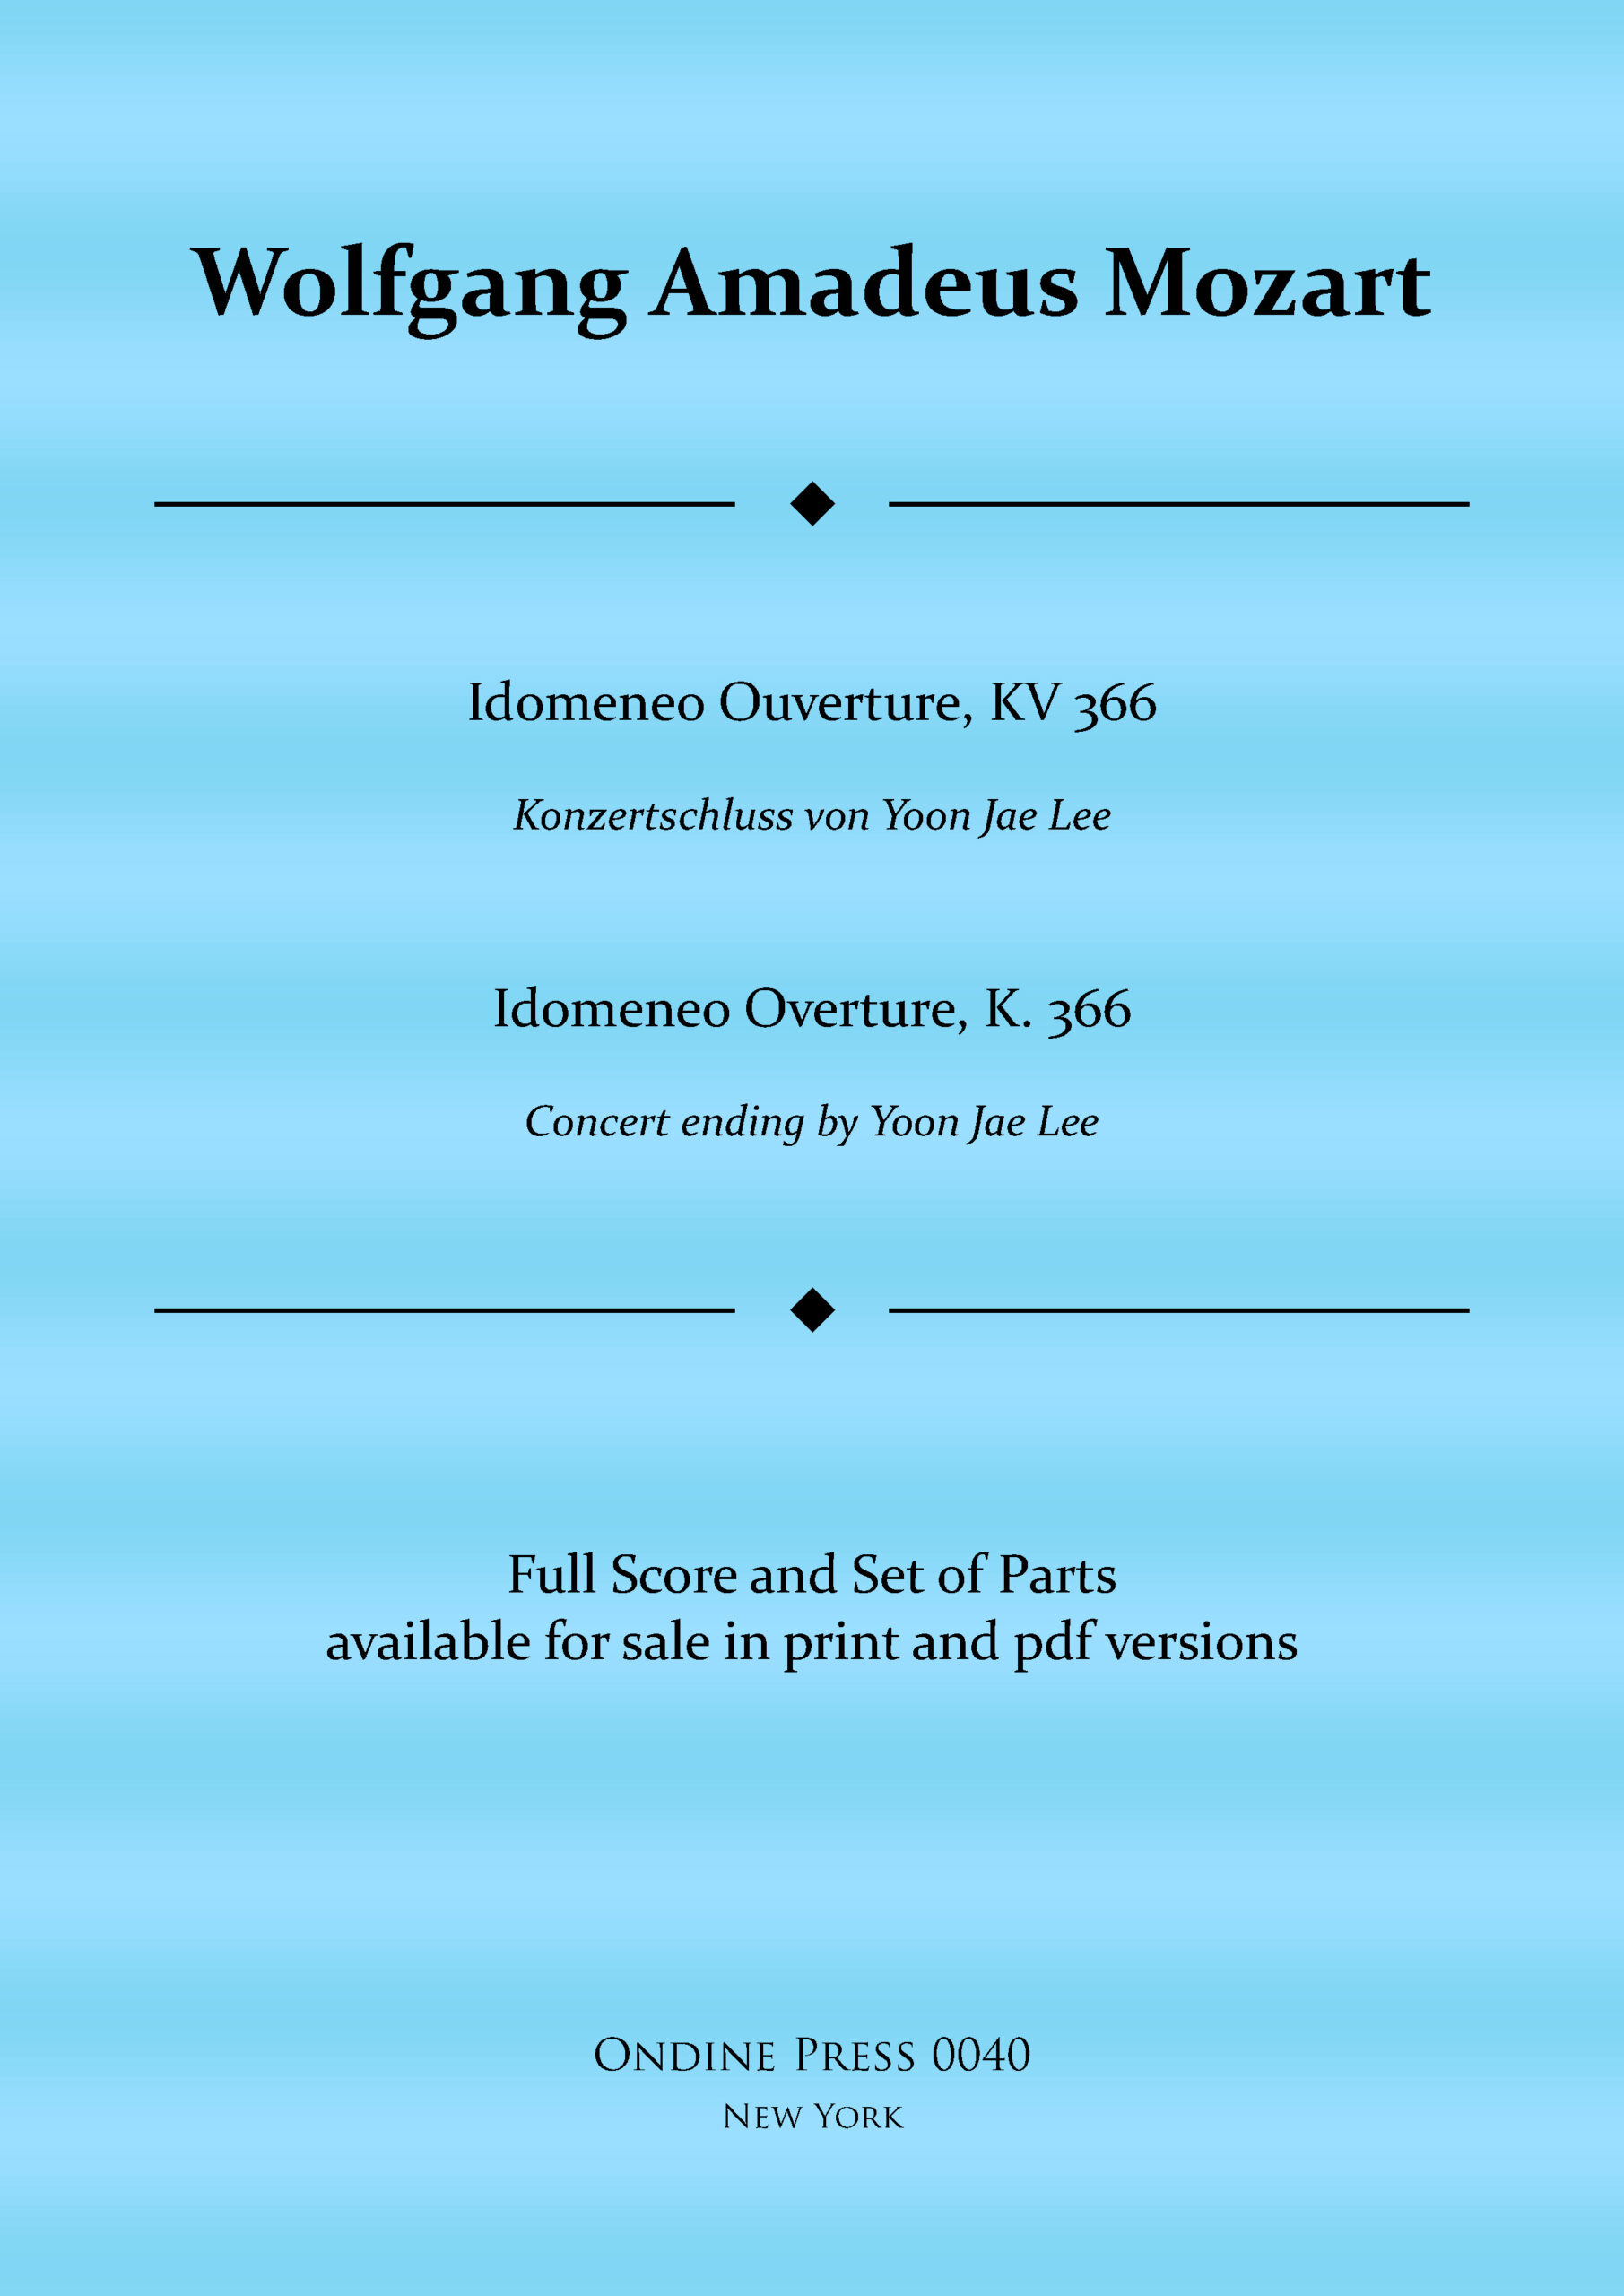 Mozart Idomeneo Overture K. 366 web cover 1 scaled